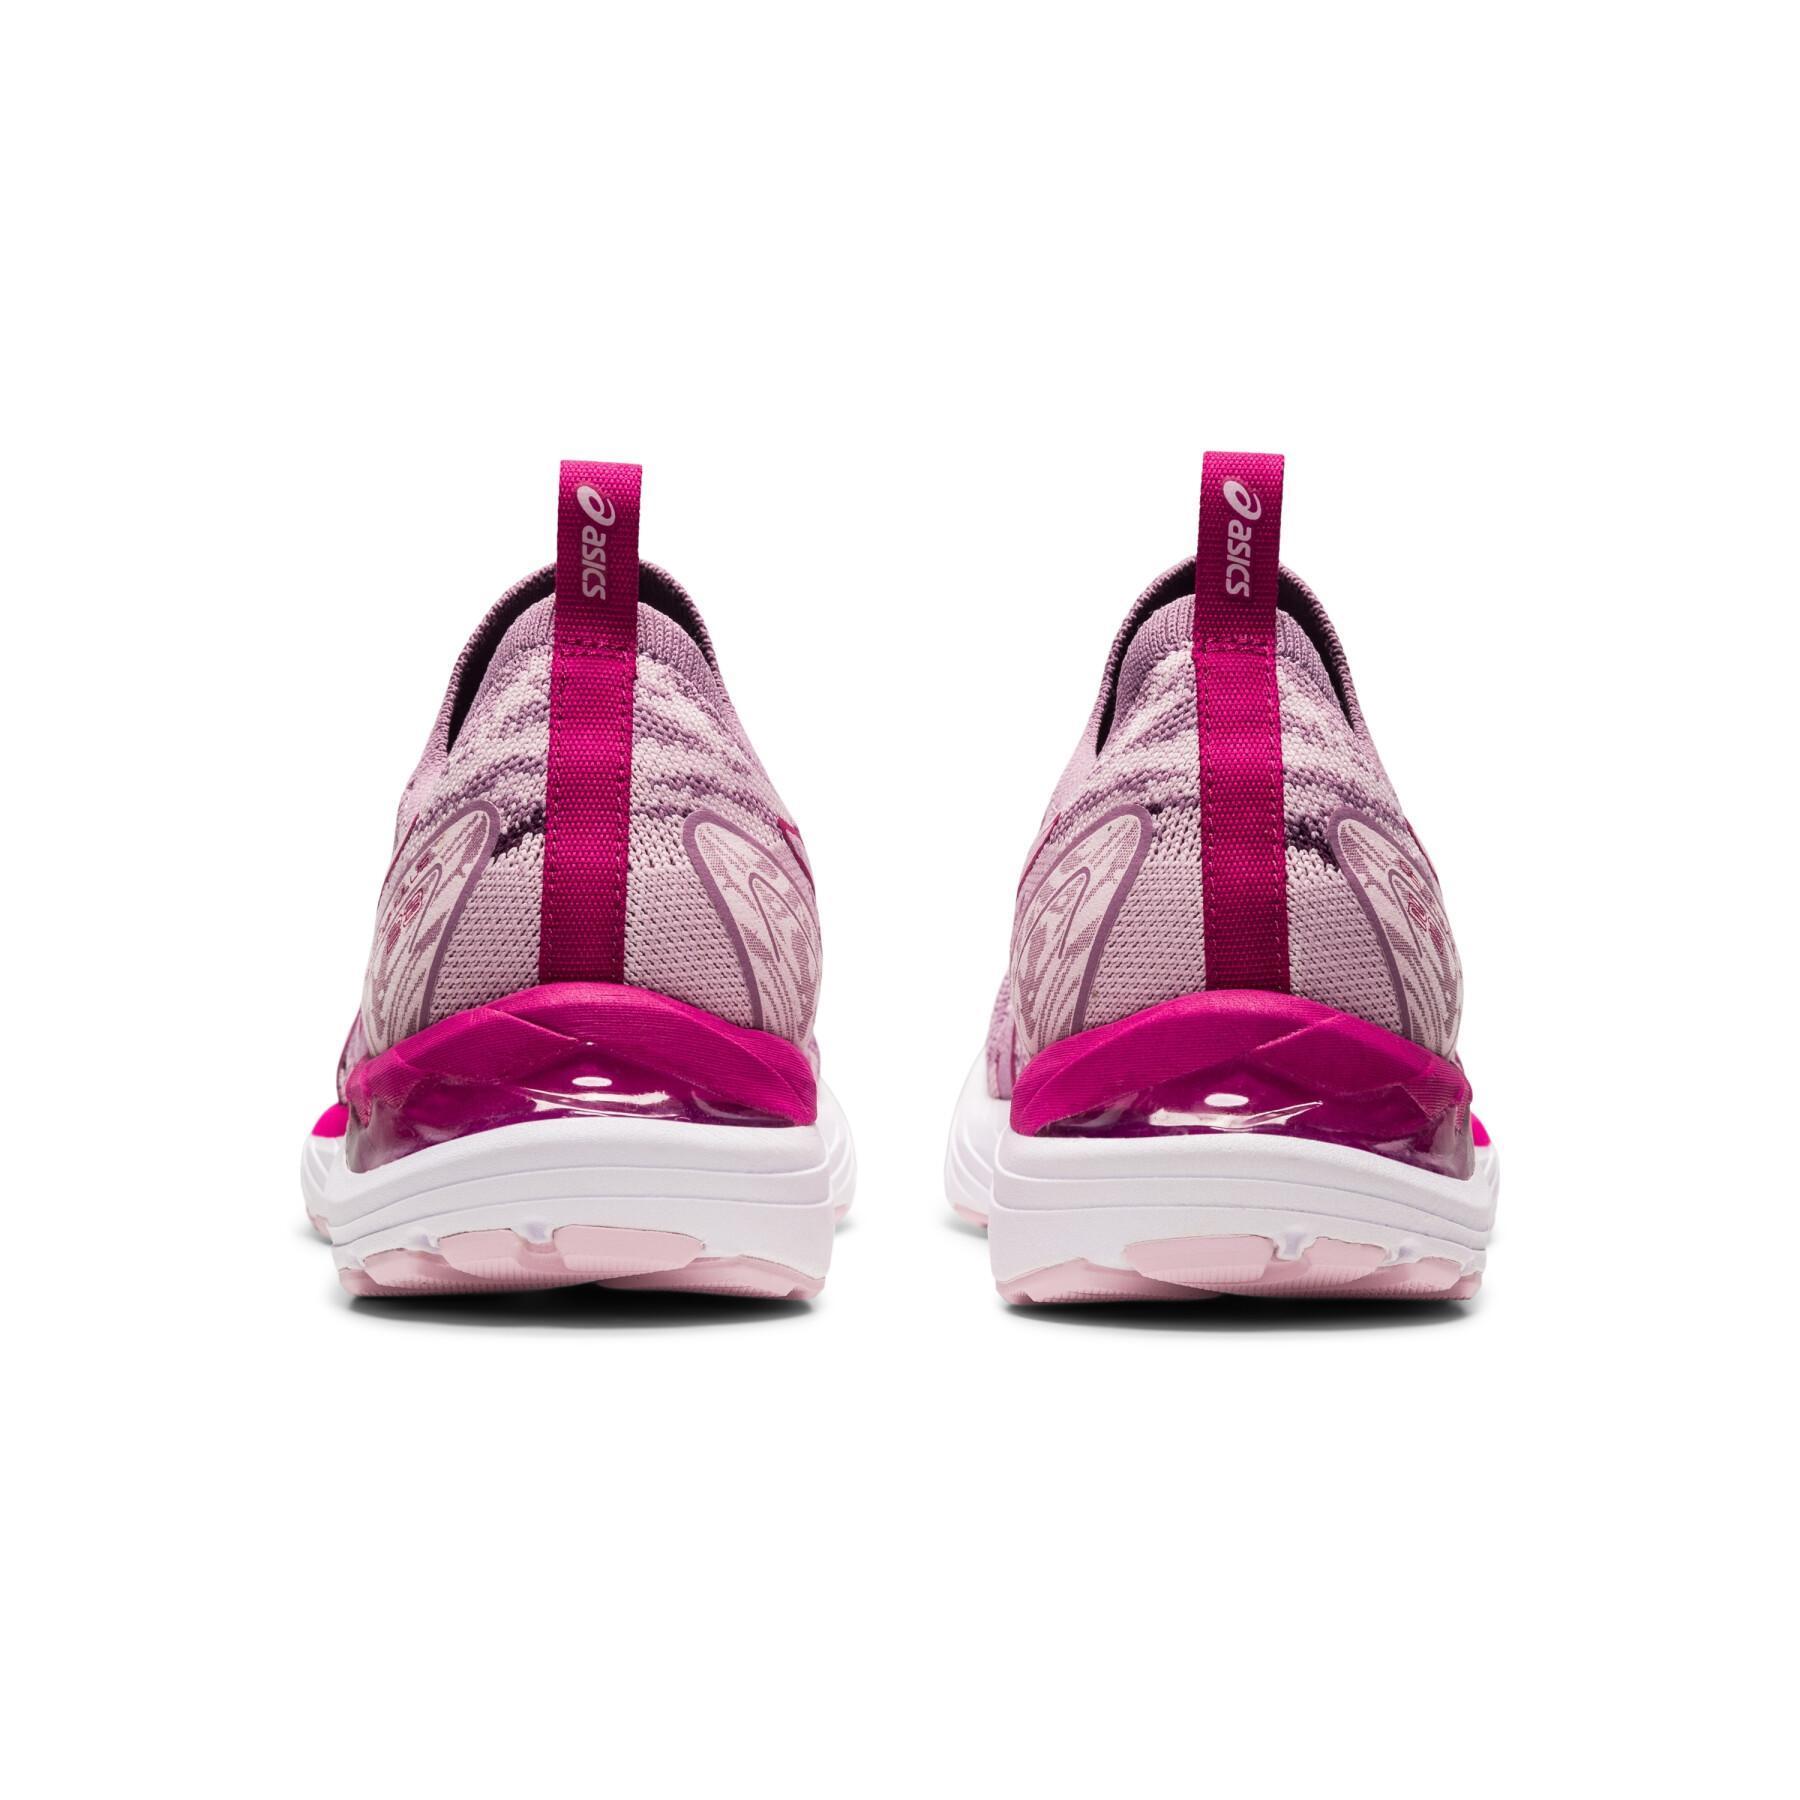 Women's running shoes Asics Gel-Cumulus 23 MK